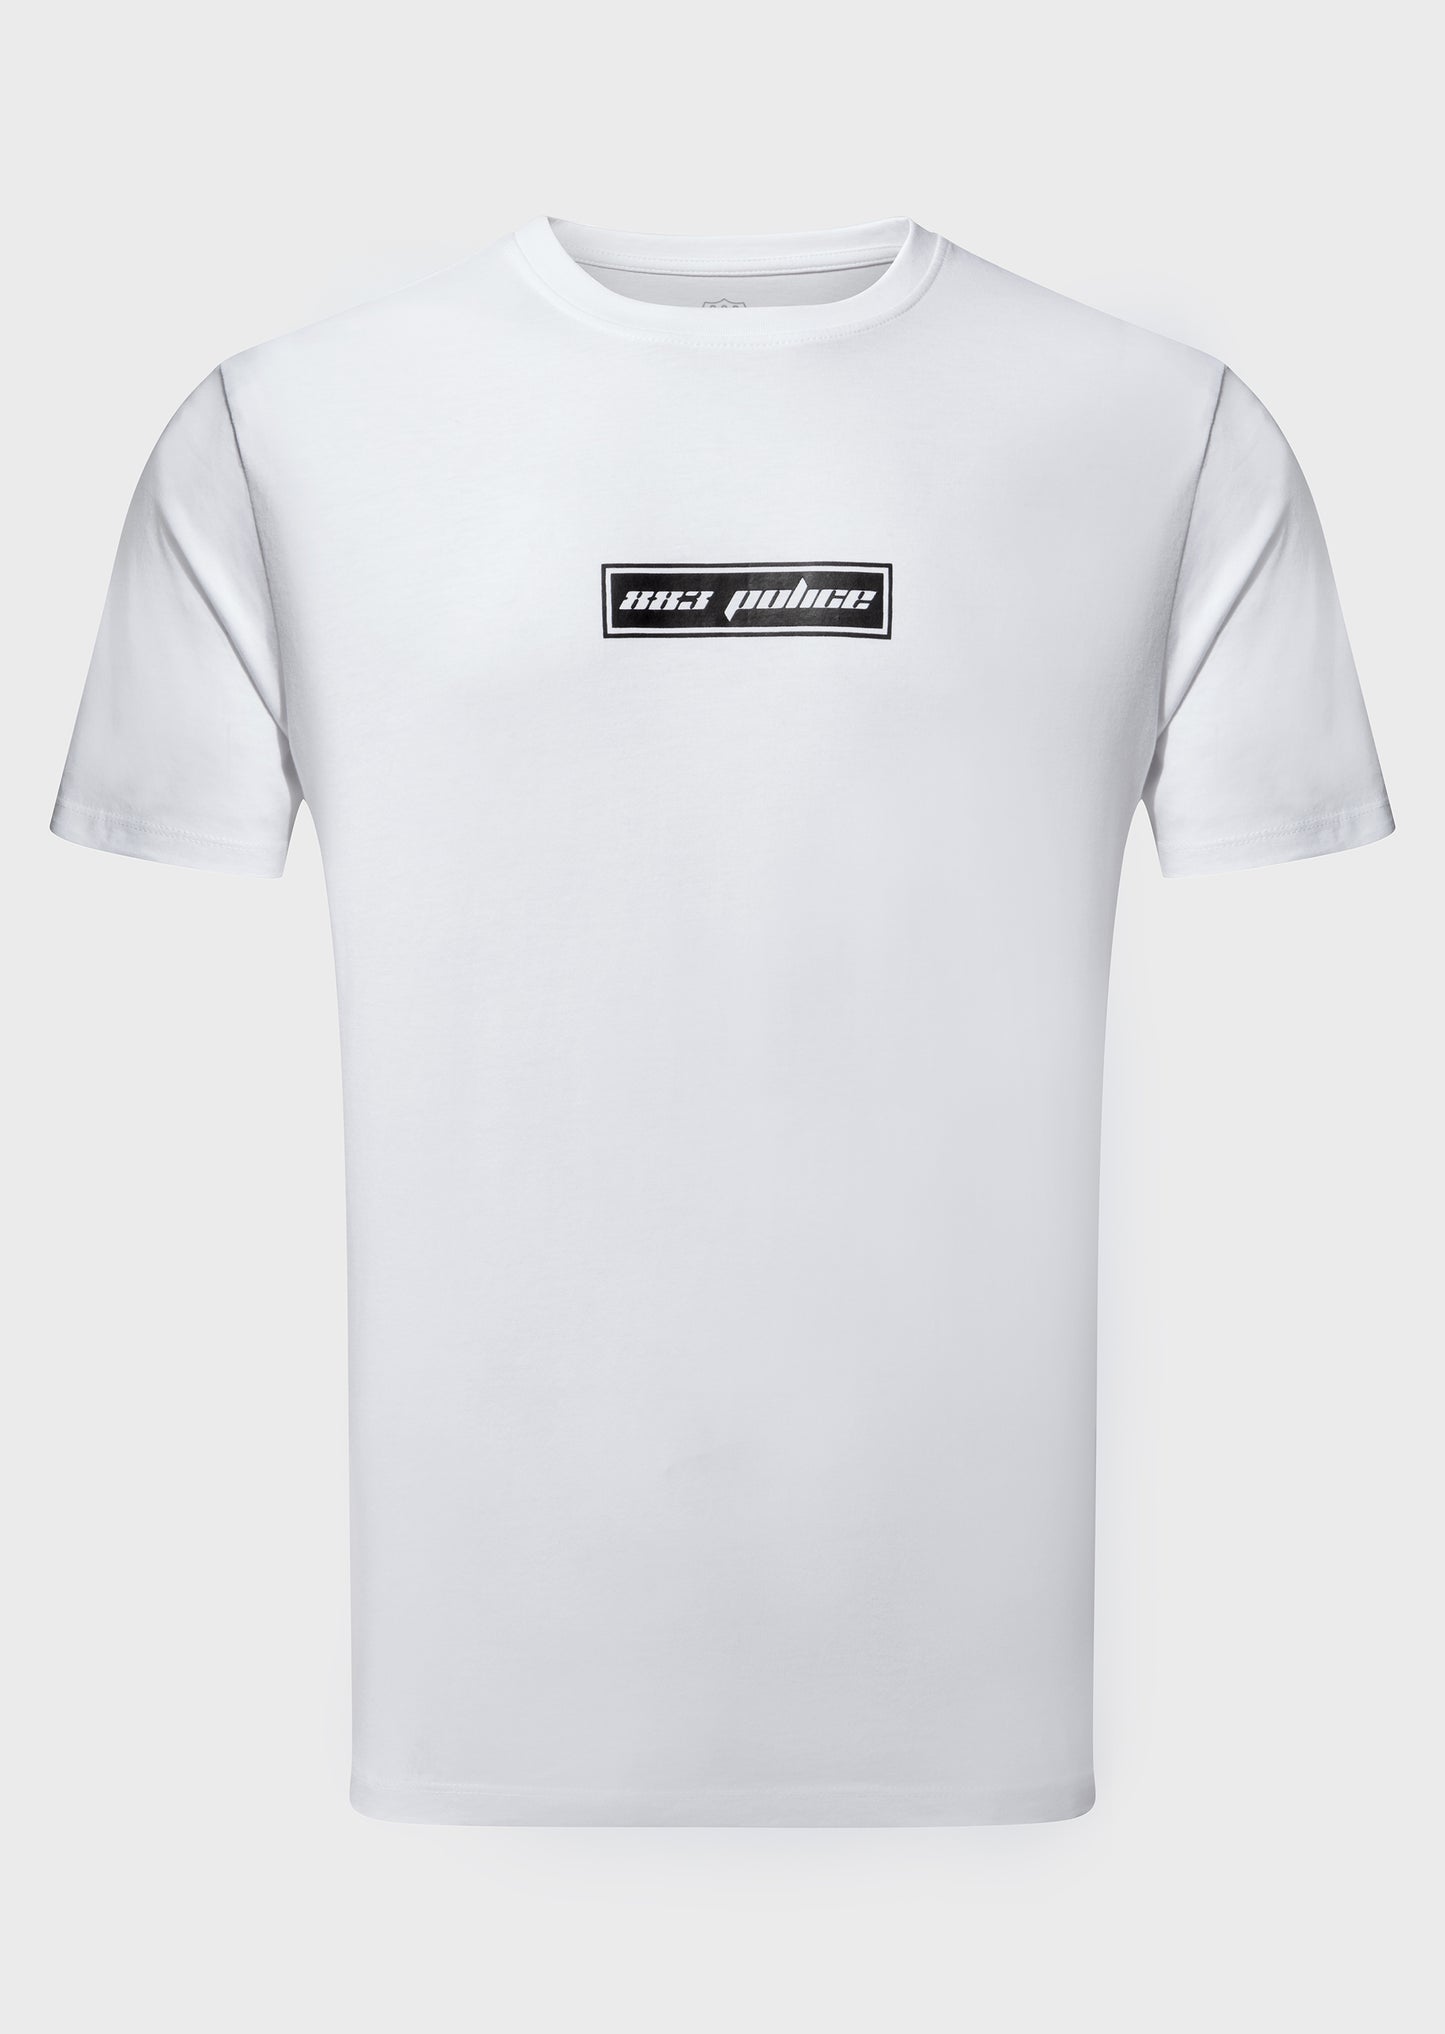 Lambro White T-Shirt